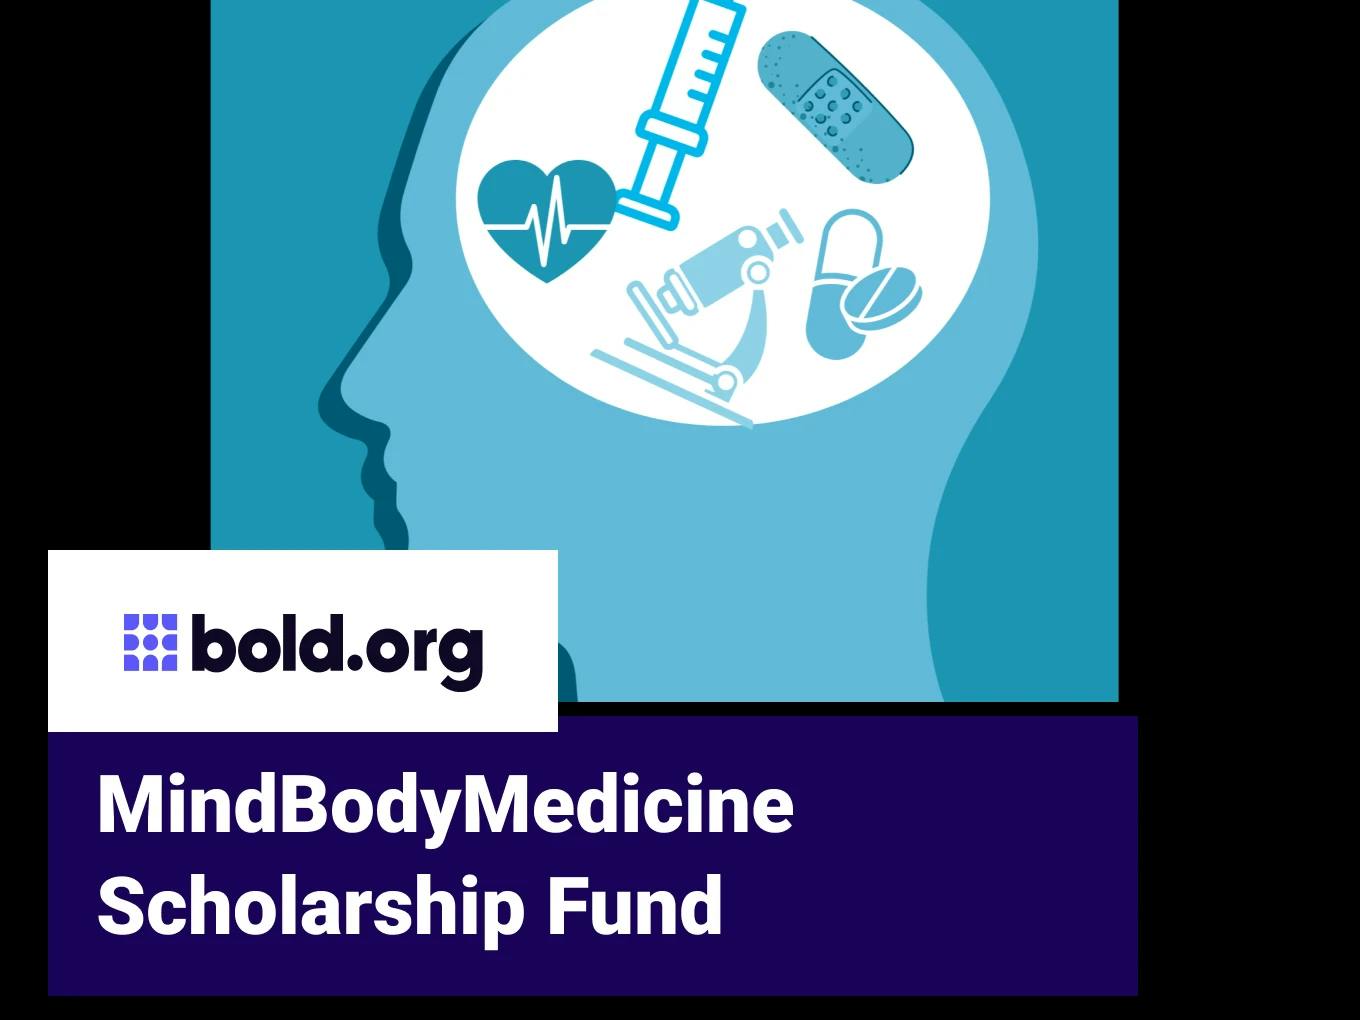 MindBodyMedicine Scholarship Fund